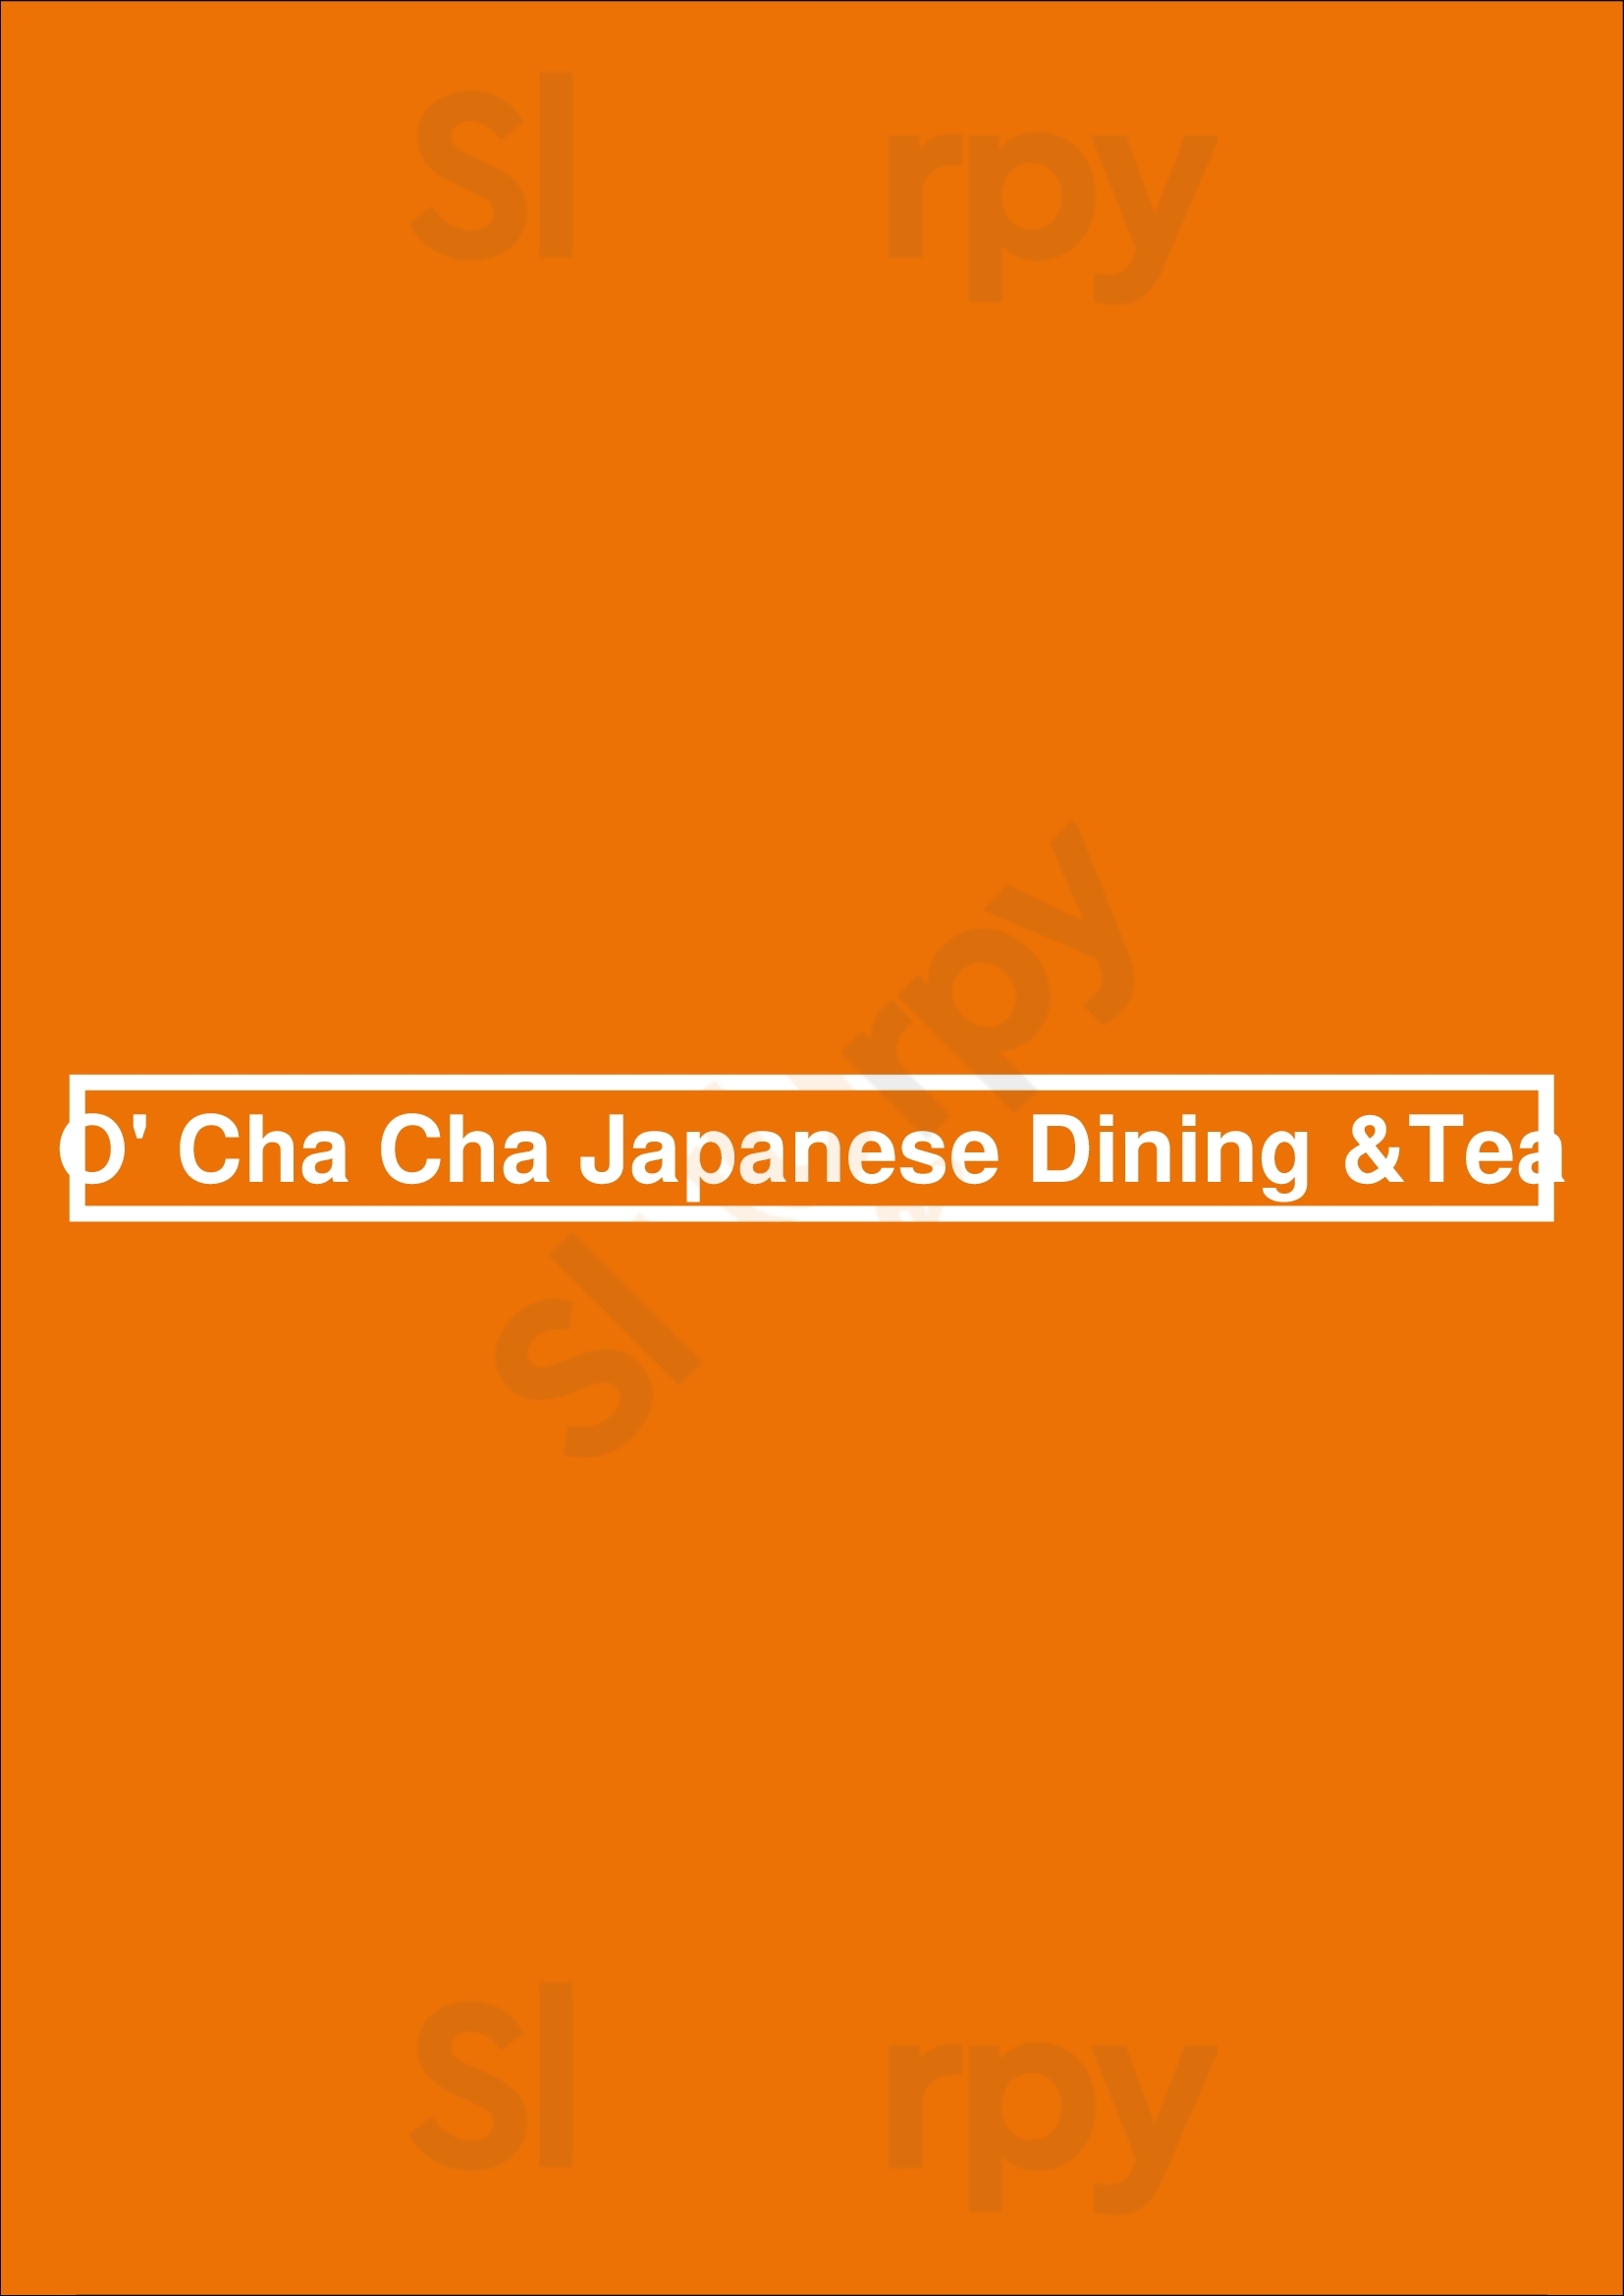 O' Cha Cha Japanese Dining &tea Cairns Menu - 1